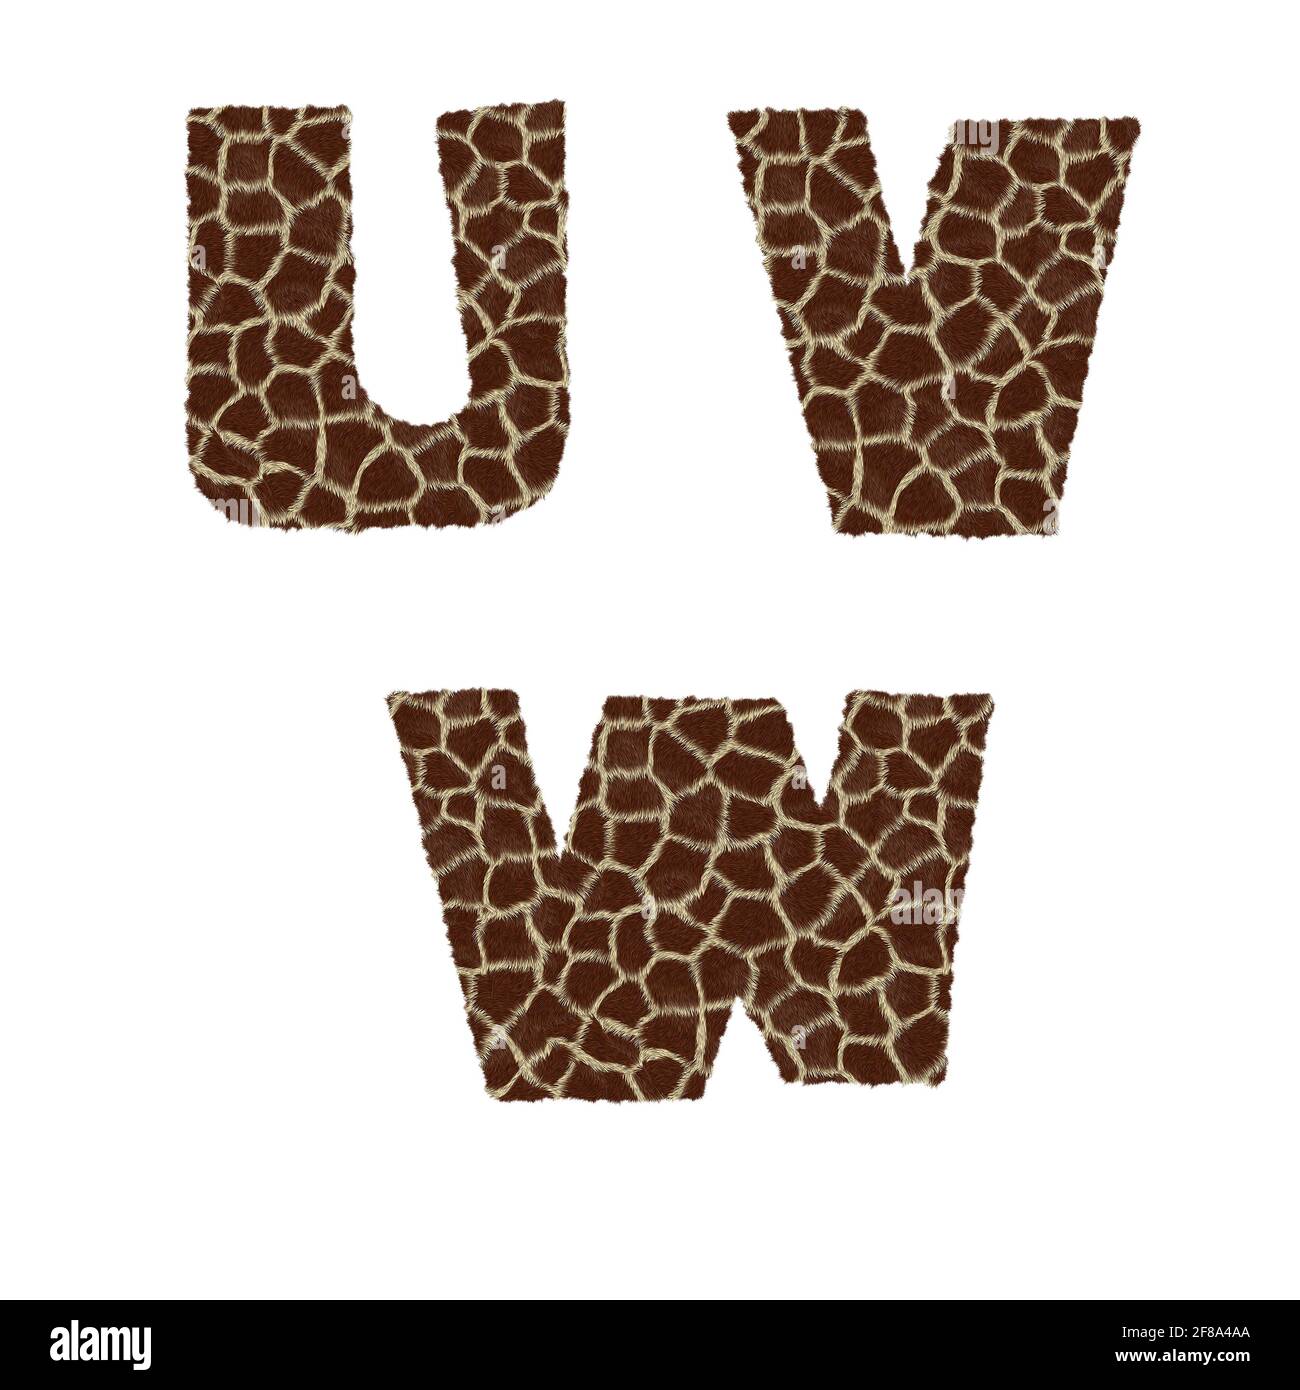 https://c8.alamy.com/comp/2F8A4AA/3d-rendering-of-giraffe-fur-alphabet-letters-u-w-2F8A4AA.jpg